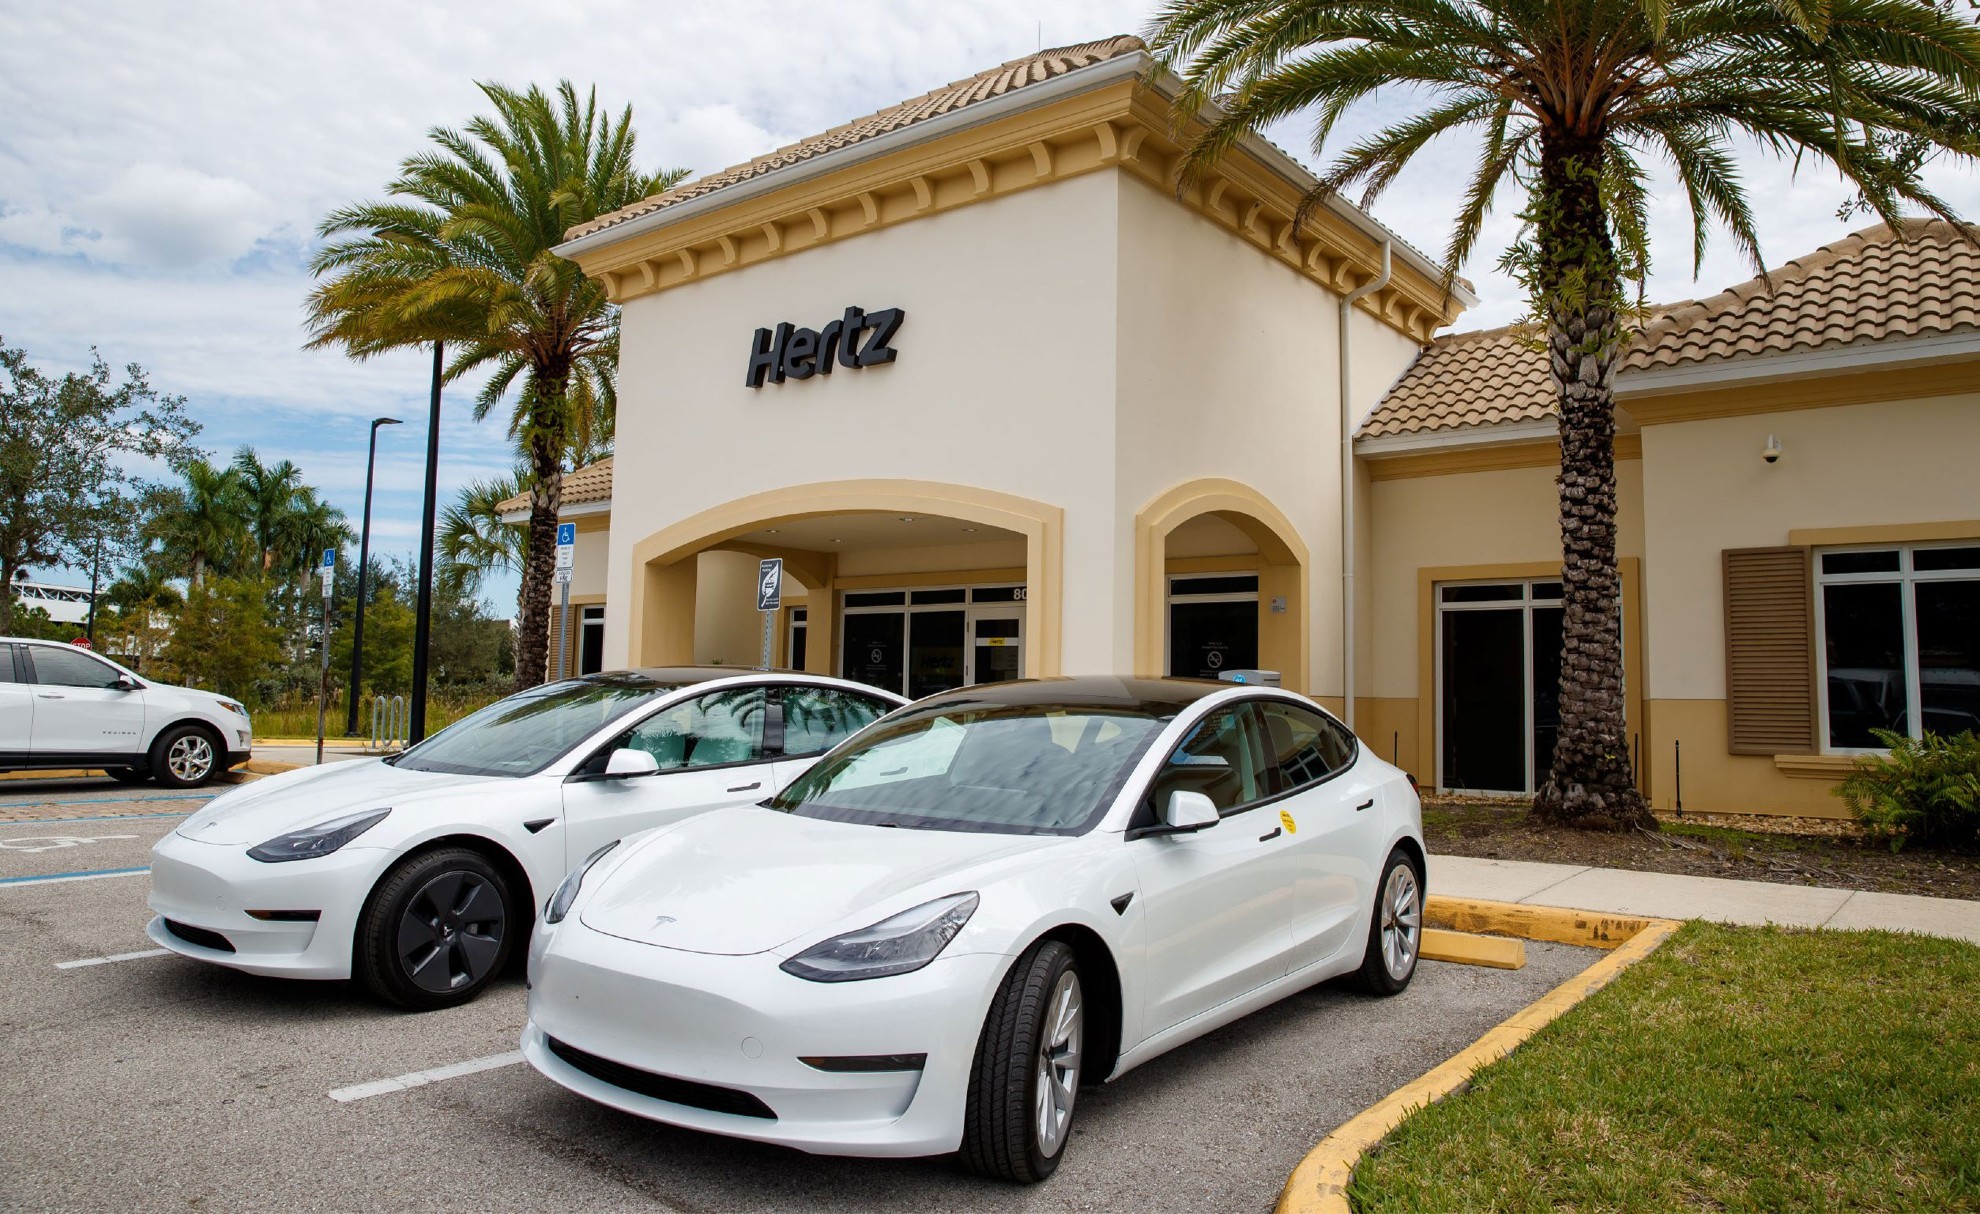 Tesla - billon de dolares - Hertz - pedido de 100.000 coches - Tesla Model 3 - Tom Brady